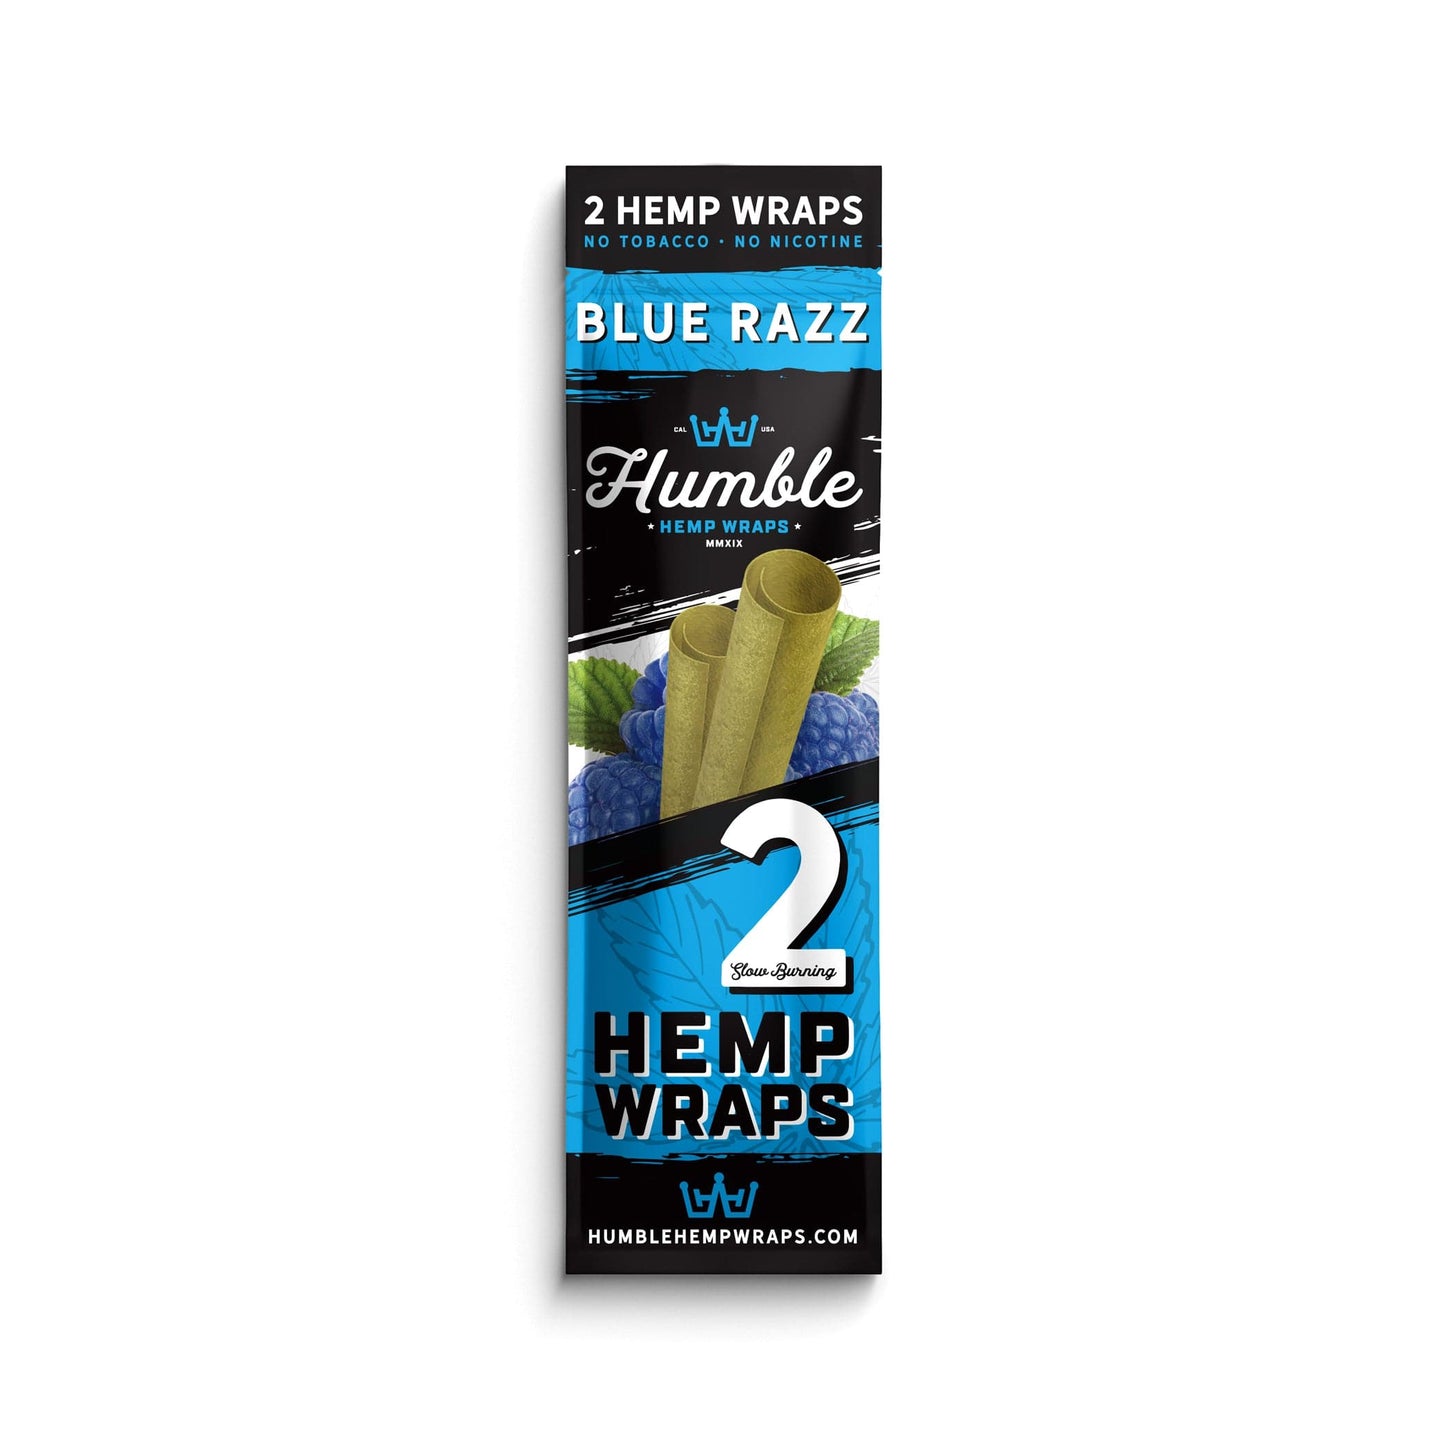 Humble Hemp Wraps - Blue Razz - 25 Pack